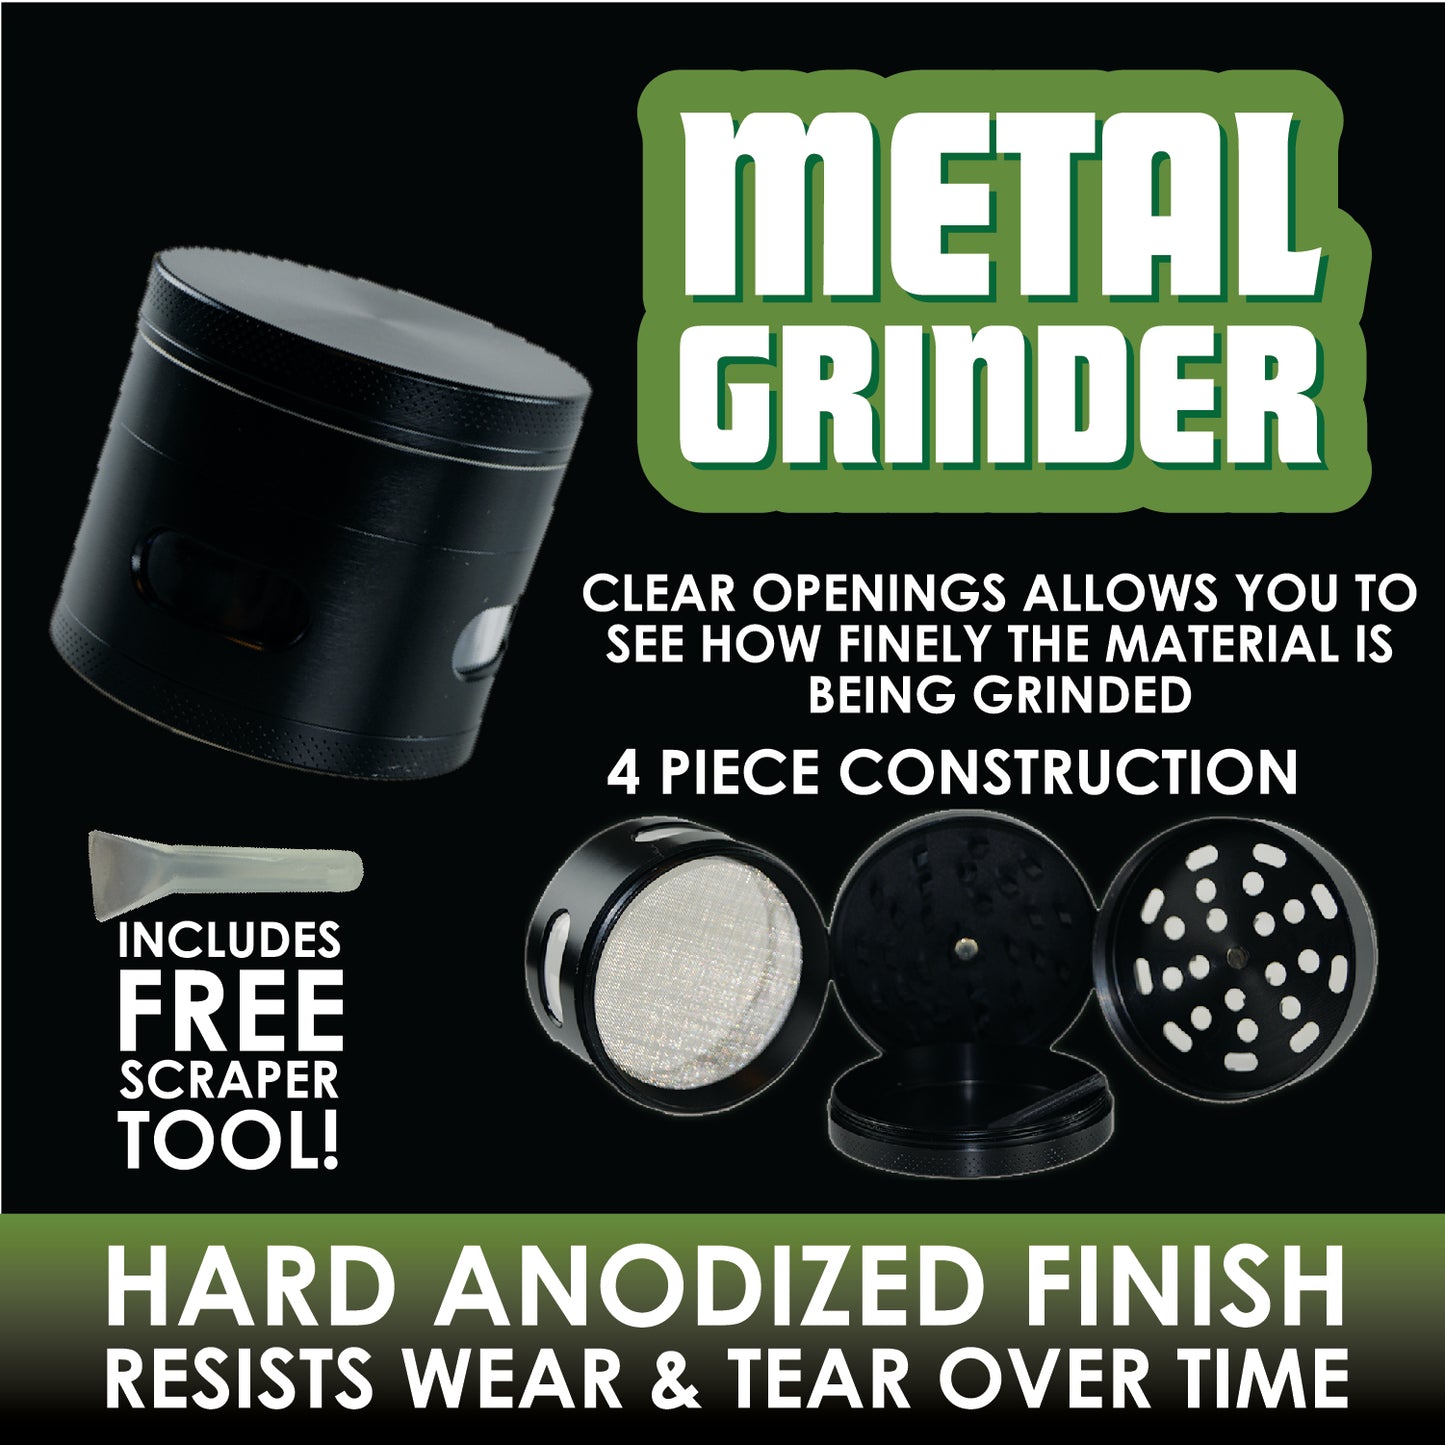 Metal Grinder Advertisement